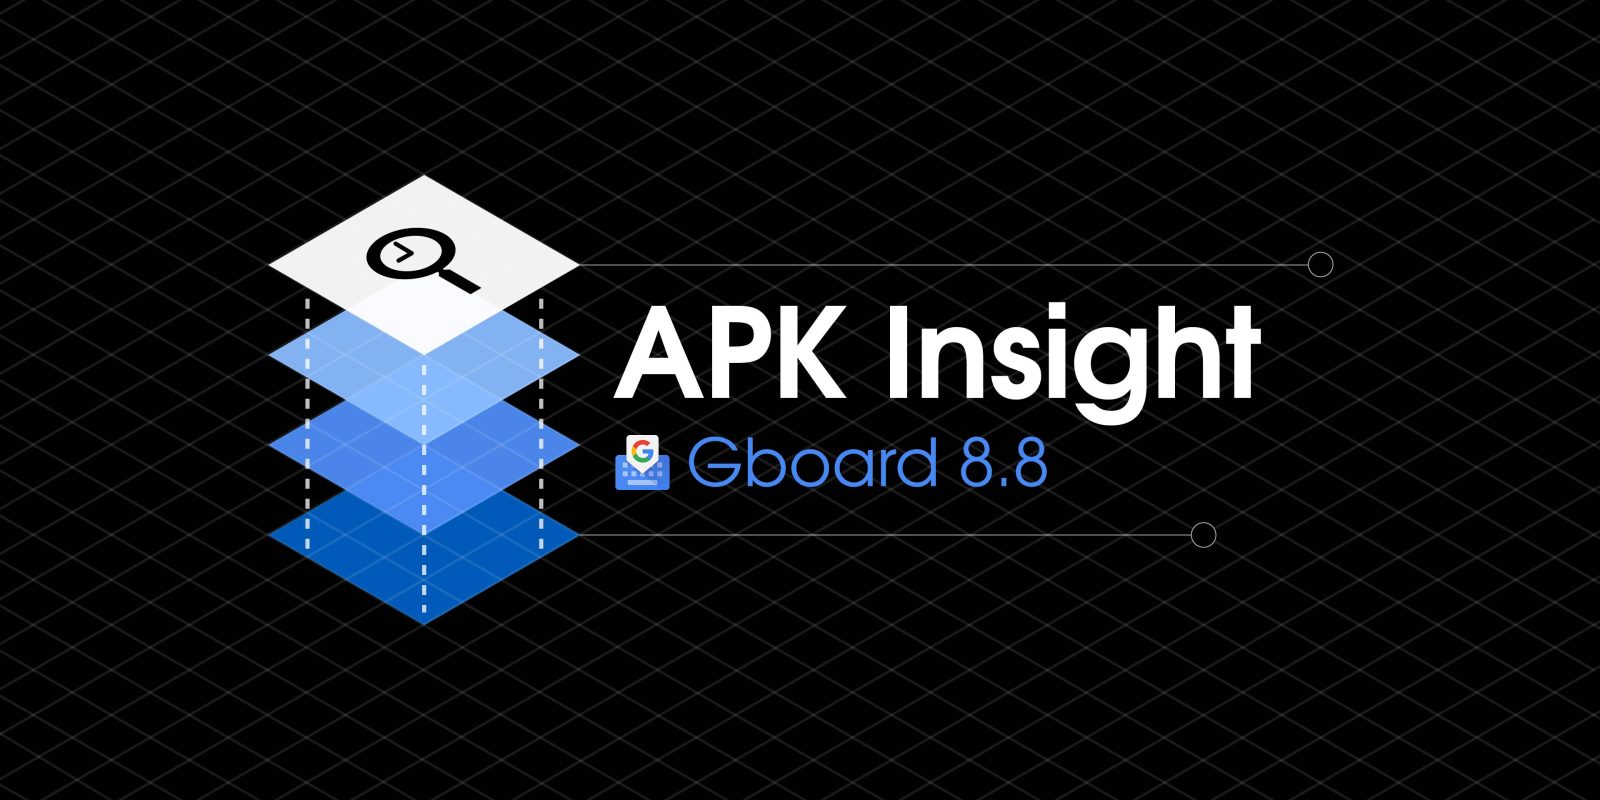 APK-Insight-Google-Gboard-8-8.jpg?quality=82&strip=all&w=1600